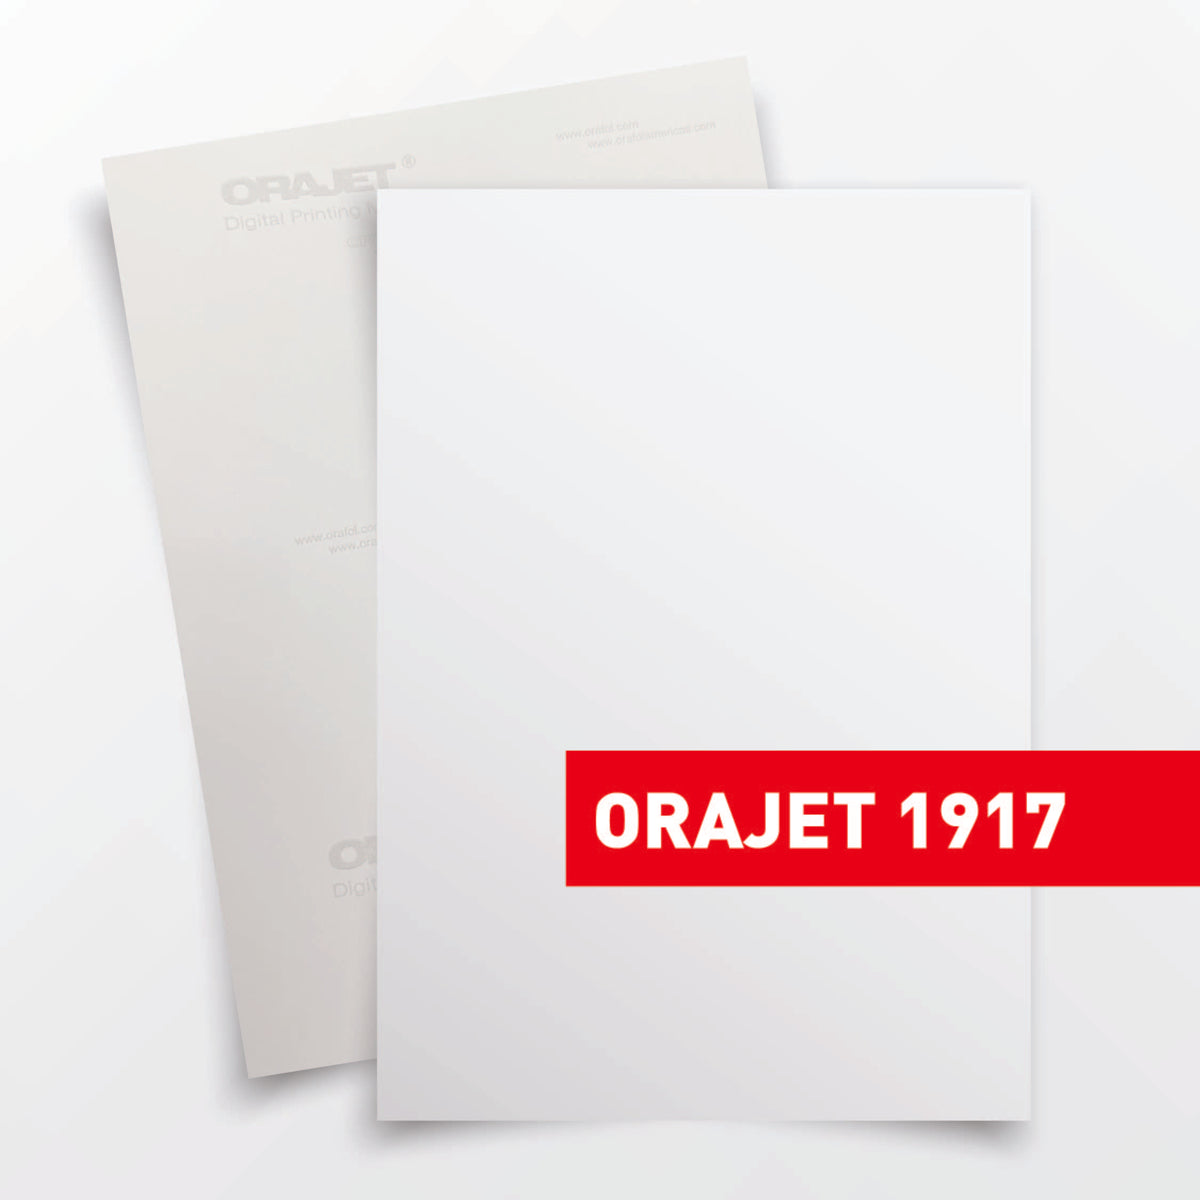 Oracal Inkjet Printable Permanent Adhesive Vinyl - 1917